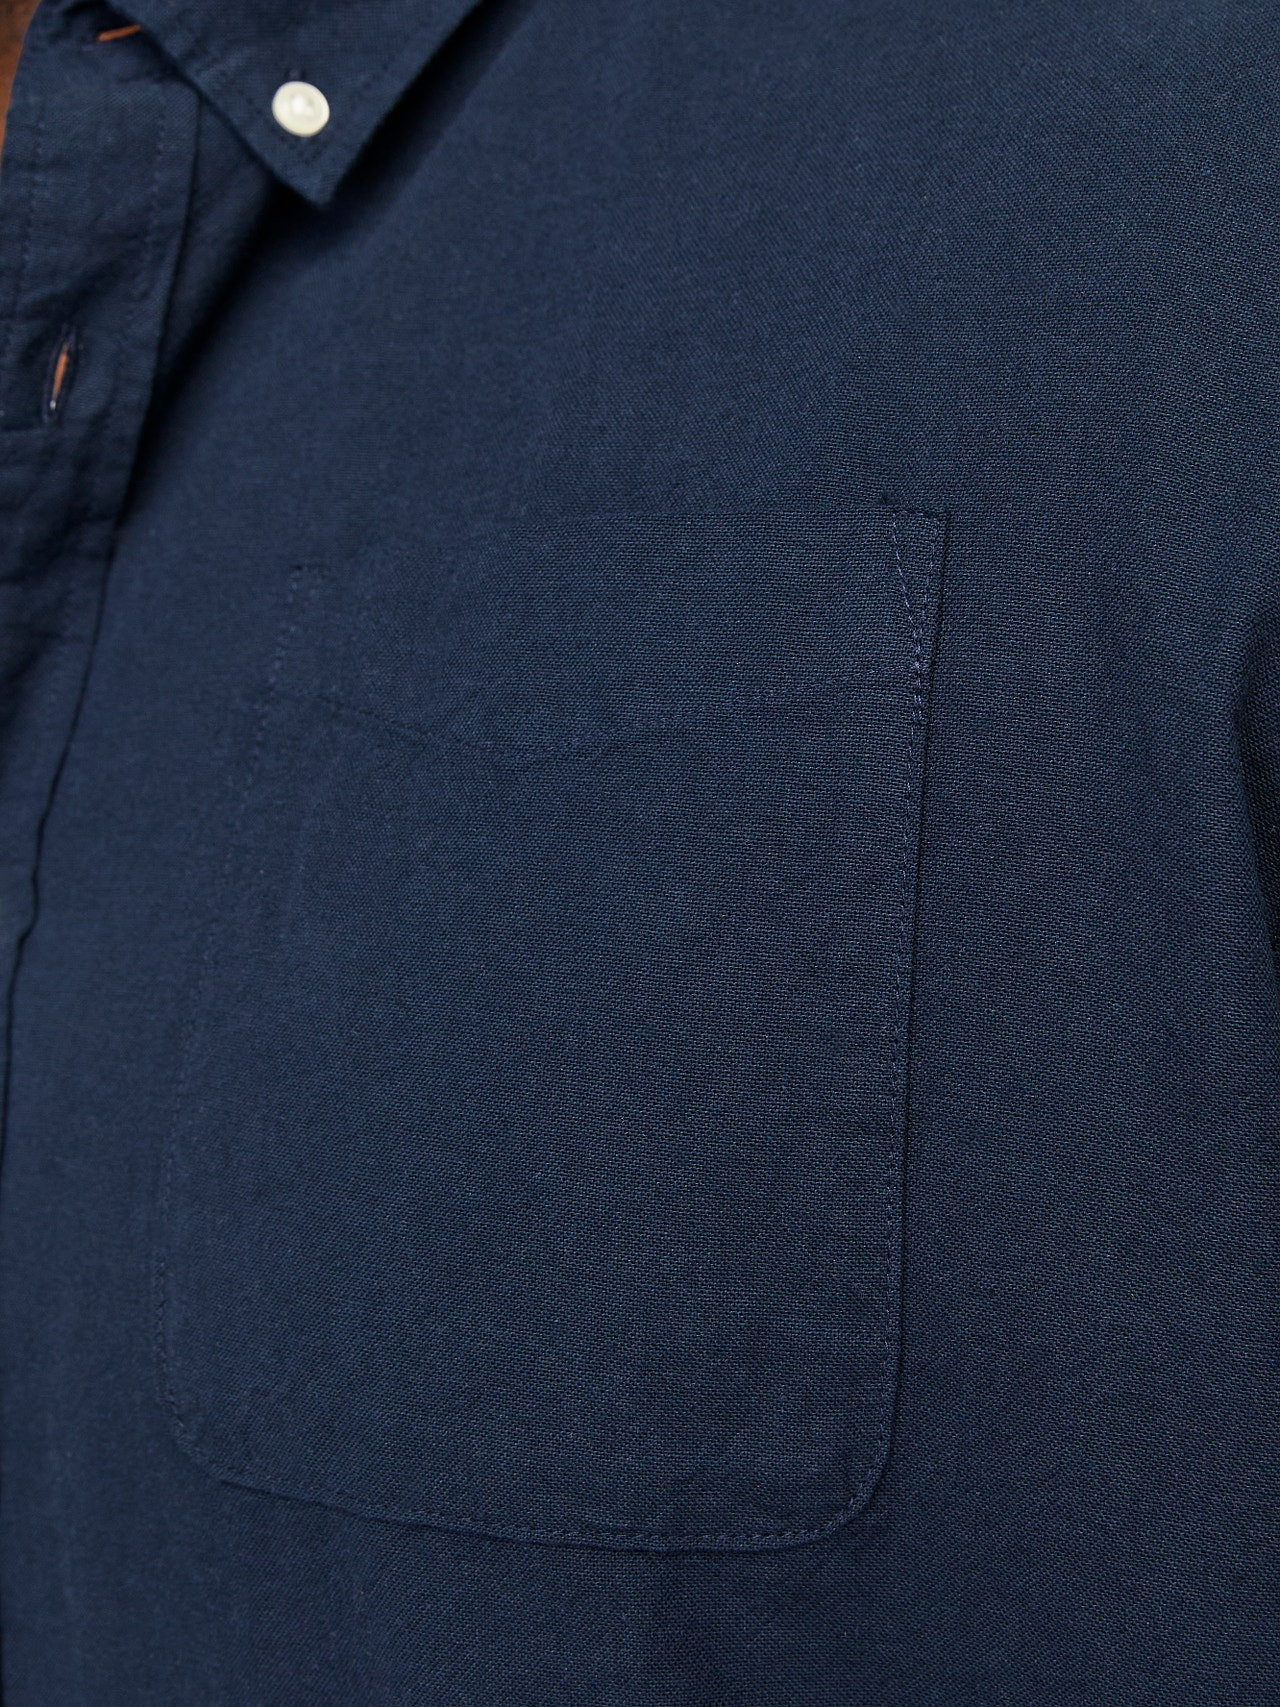 Jack & Jones Plus Slim Fit Casual shirt -Navy Blazer - 12190444